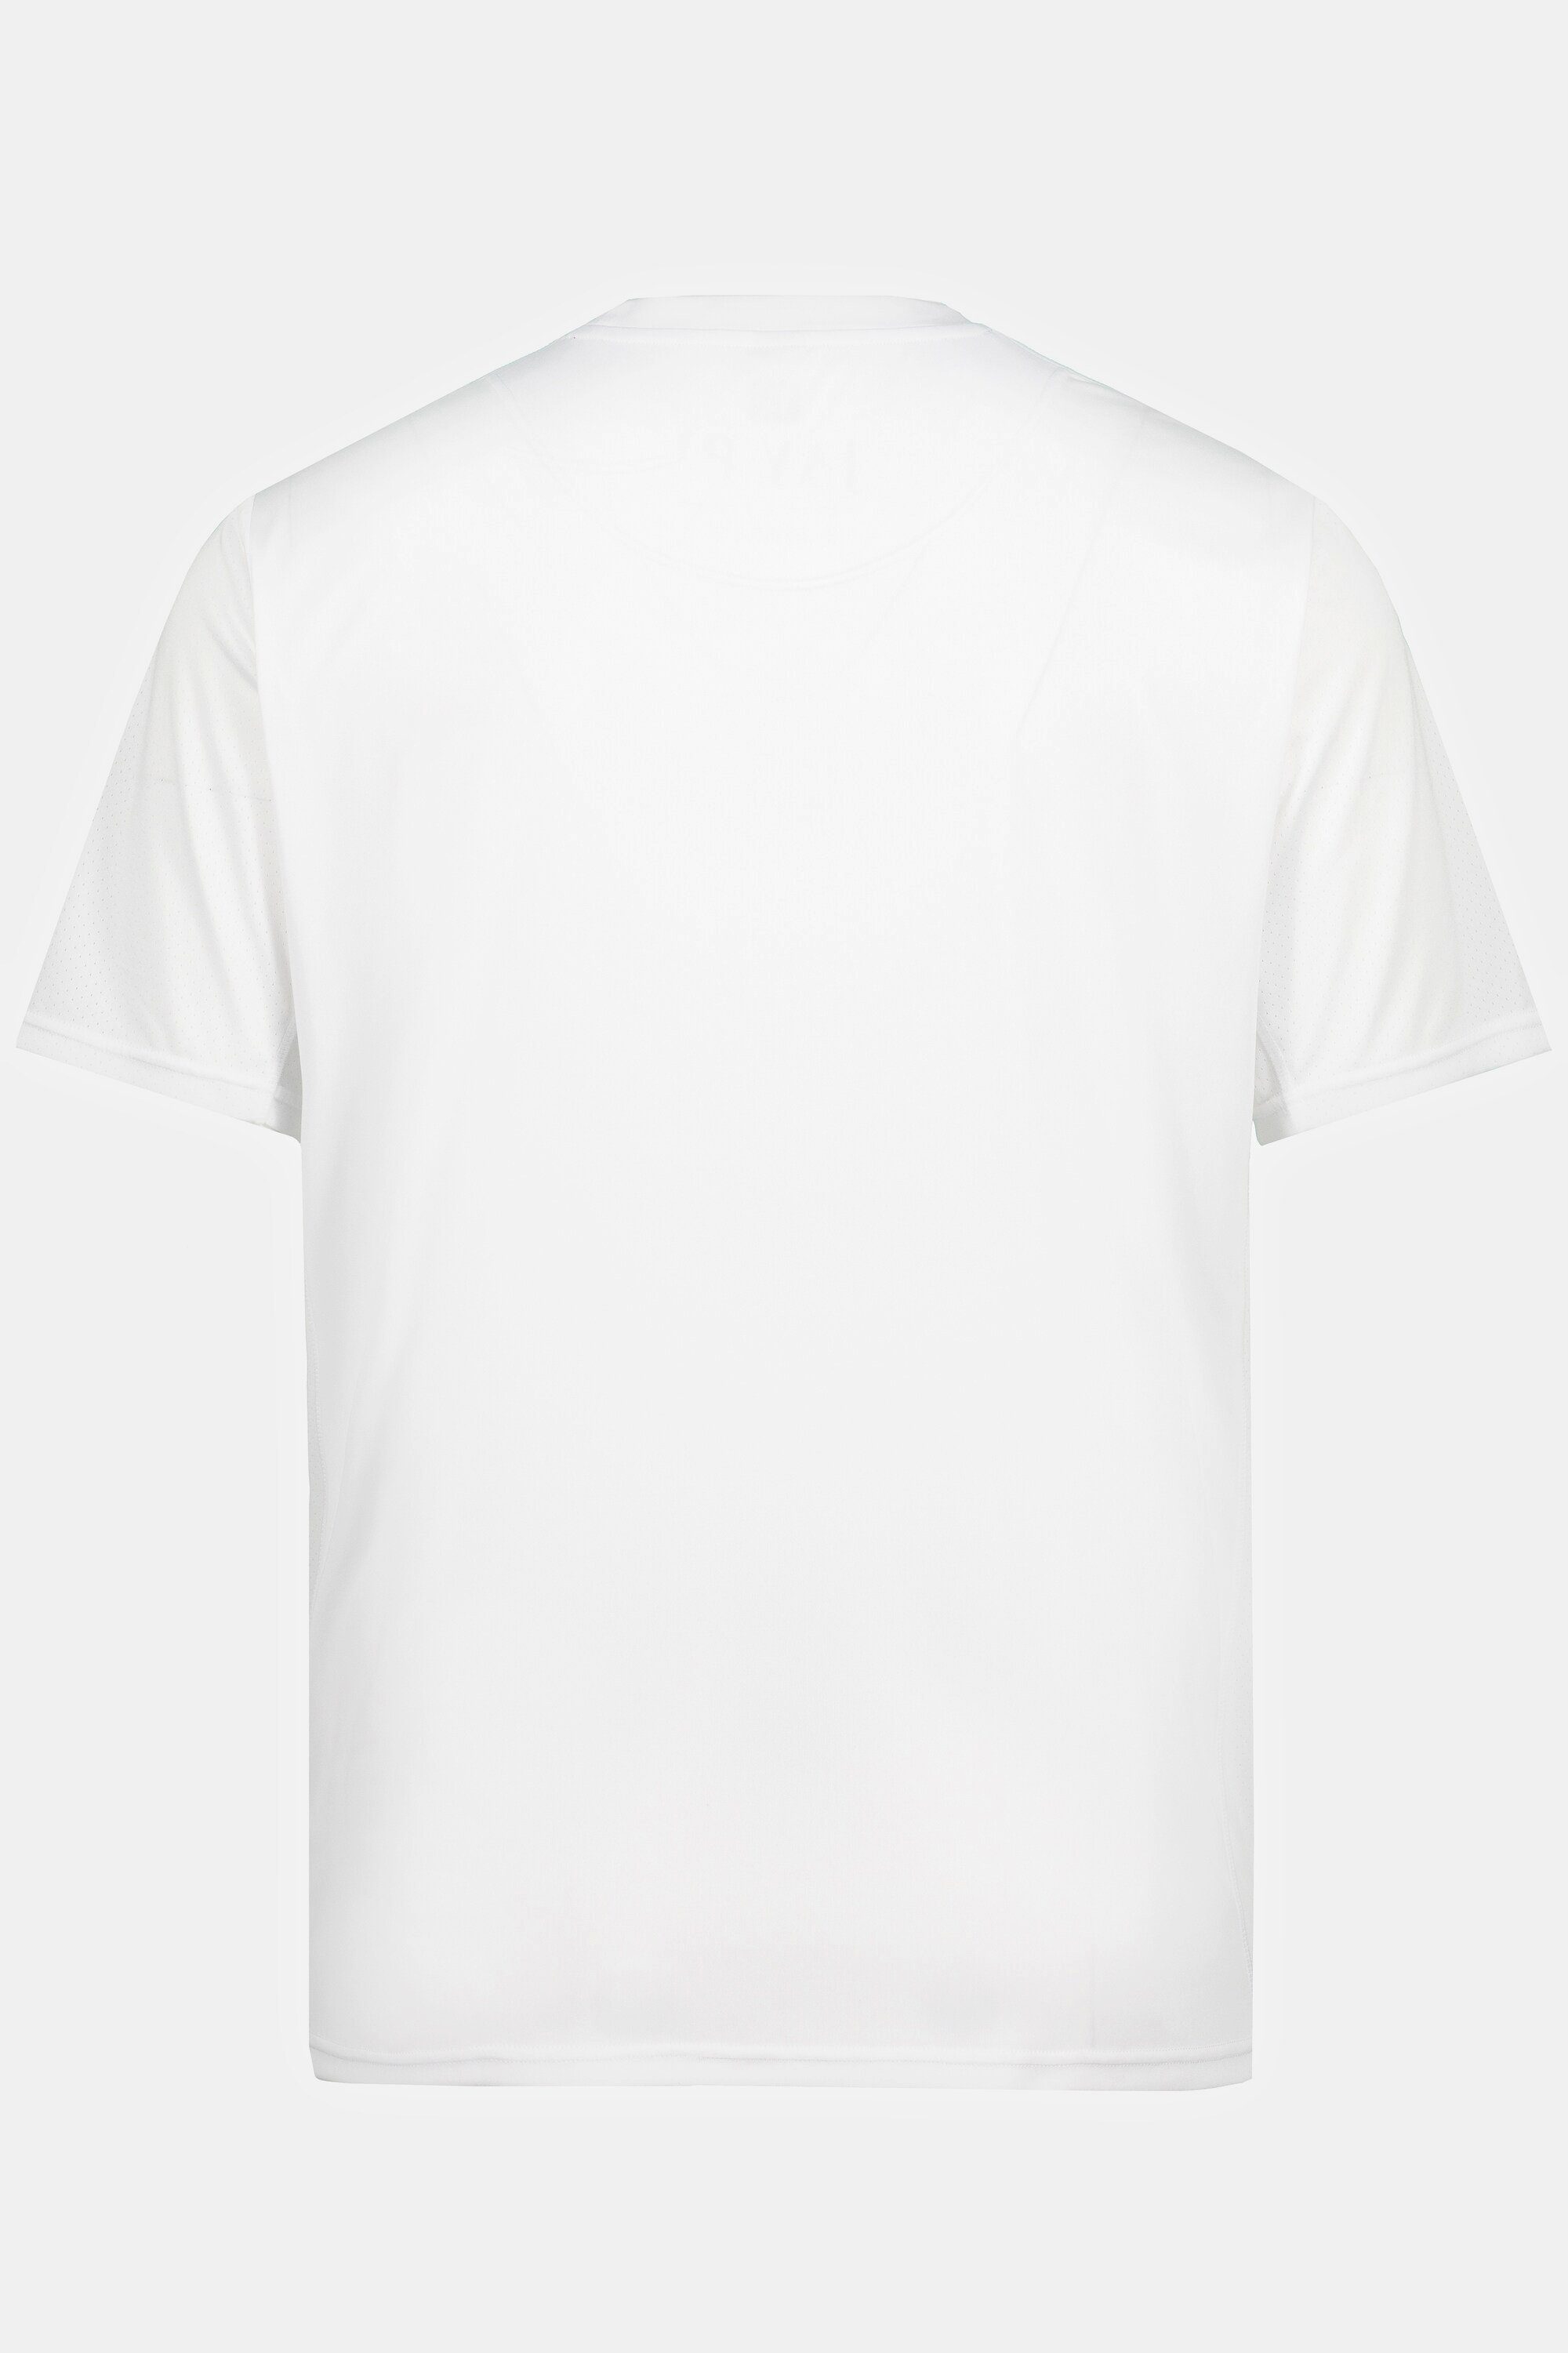 atmungsaktiv T-Shirt schneeweiß Funktions-Shirt Tennis Halbarm JP1880